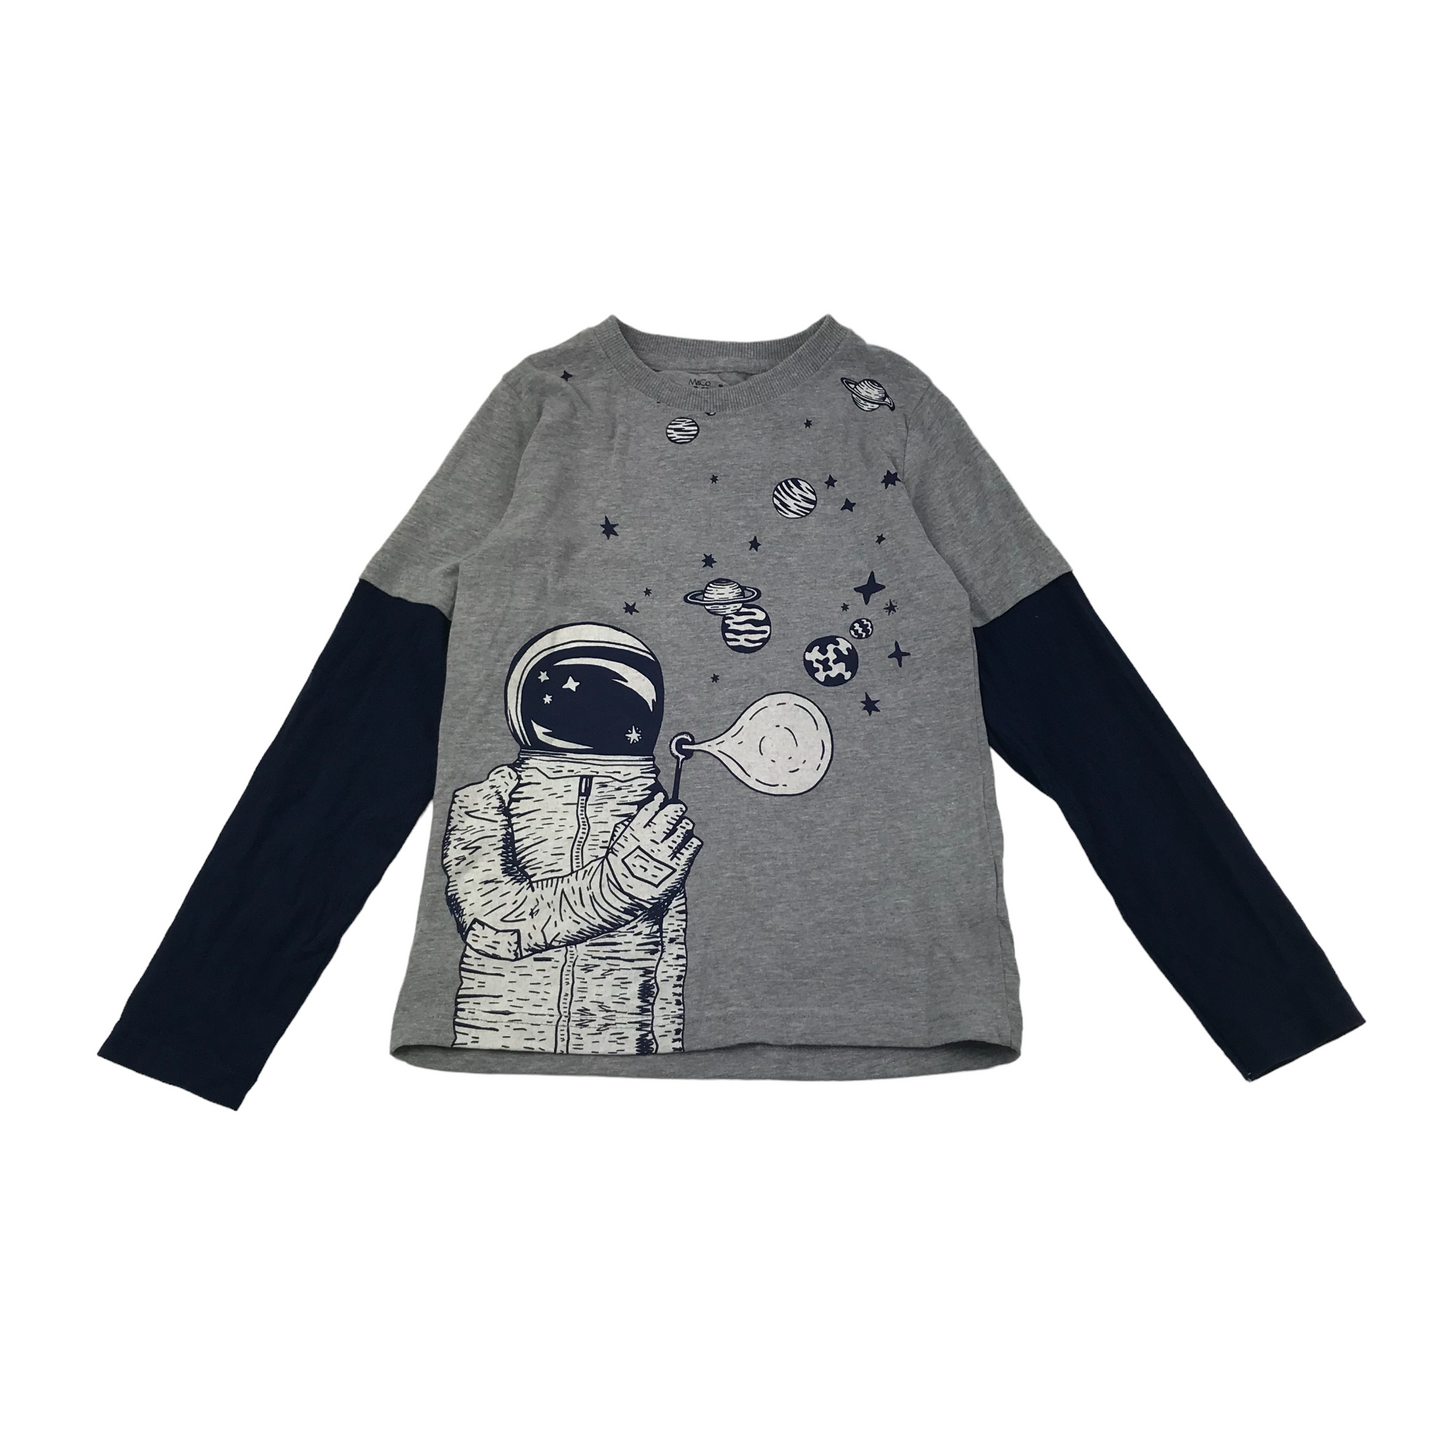 M&Co Grey Astronaut Long Sleeve T-shirt Age 7